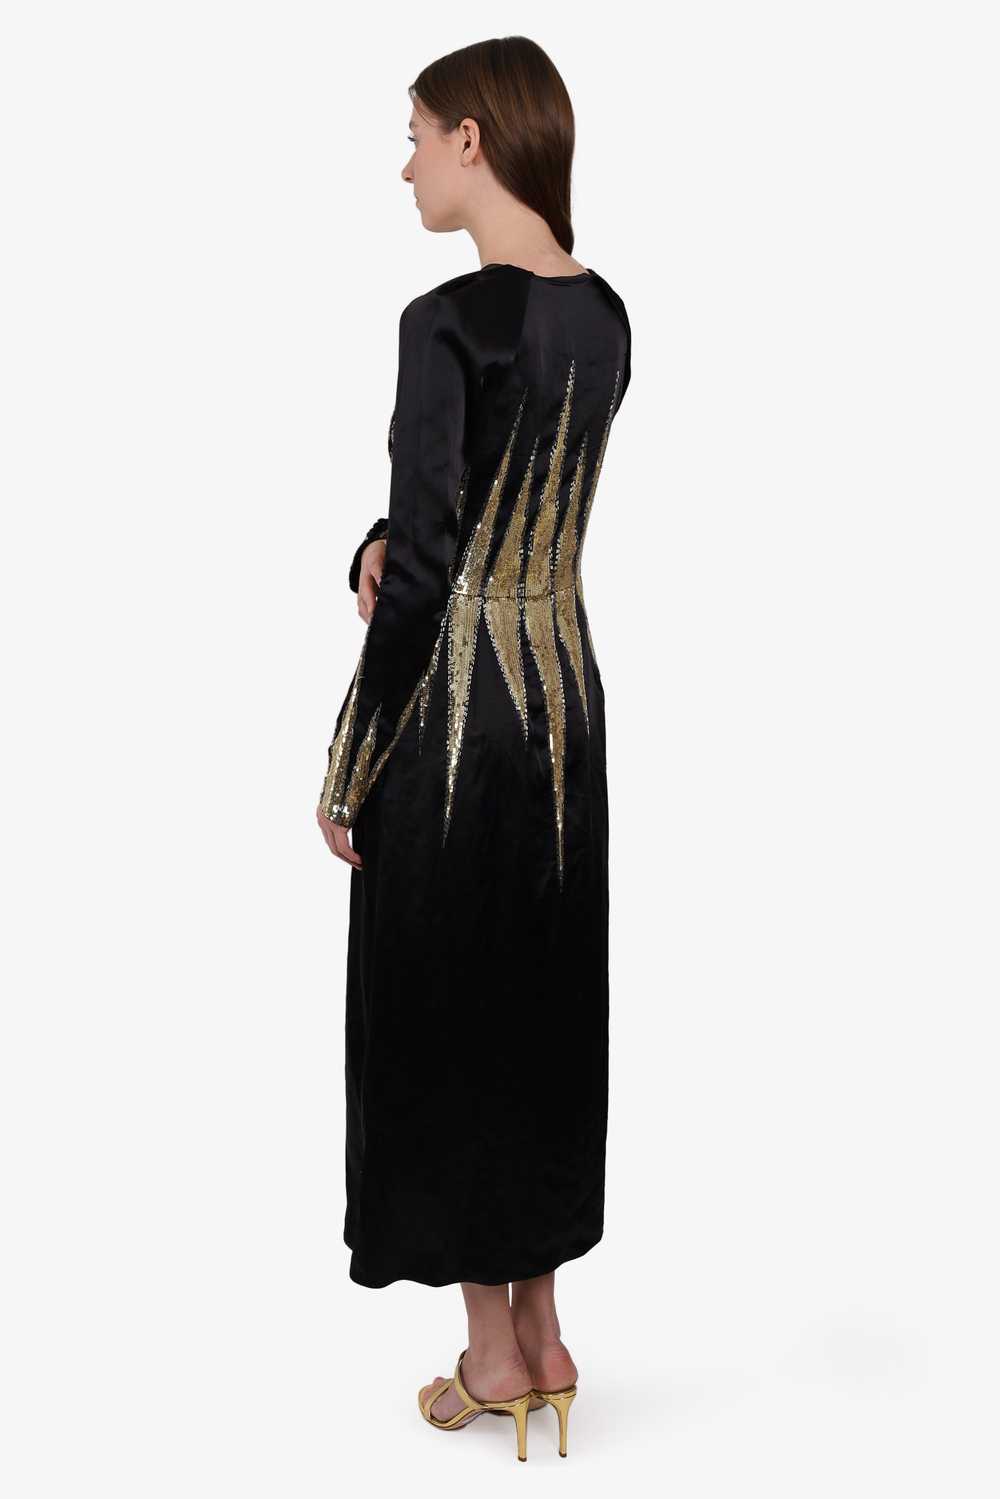 Attico Black Long-sleeve V-Neck Dress with Gold S… - image 3